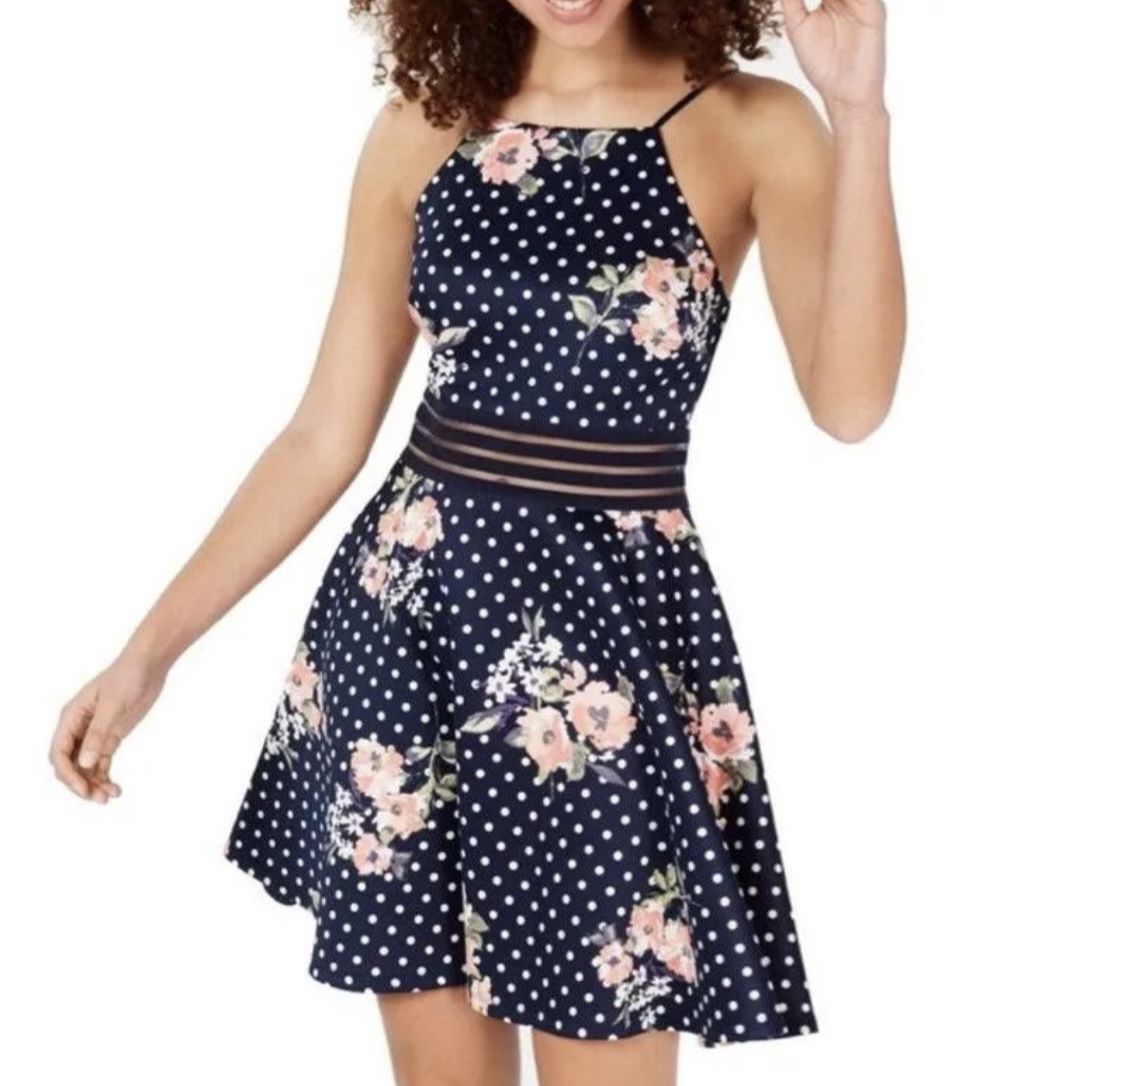 City Studio A-Line Polka Dot Floral Halter Dress Size S/M (5)